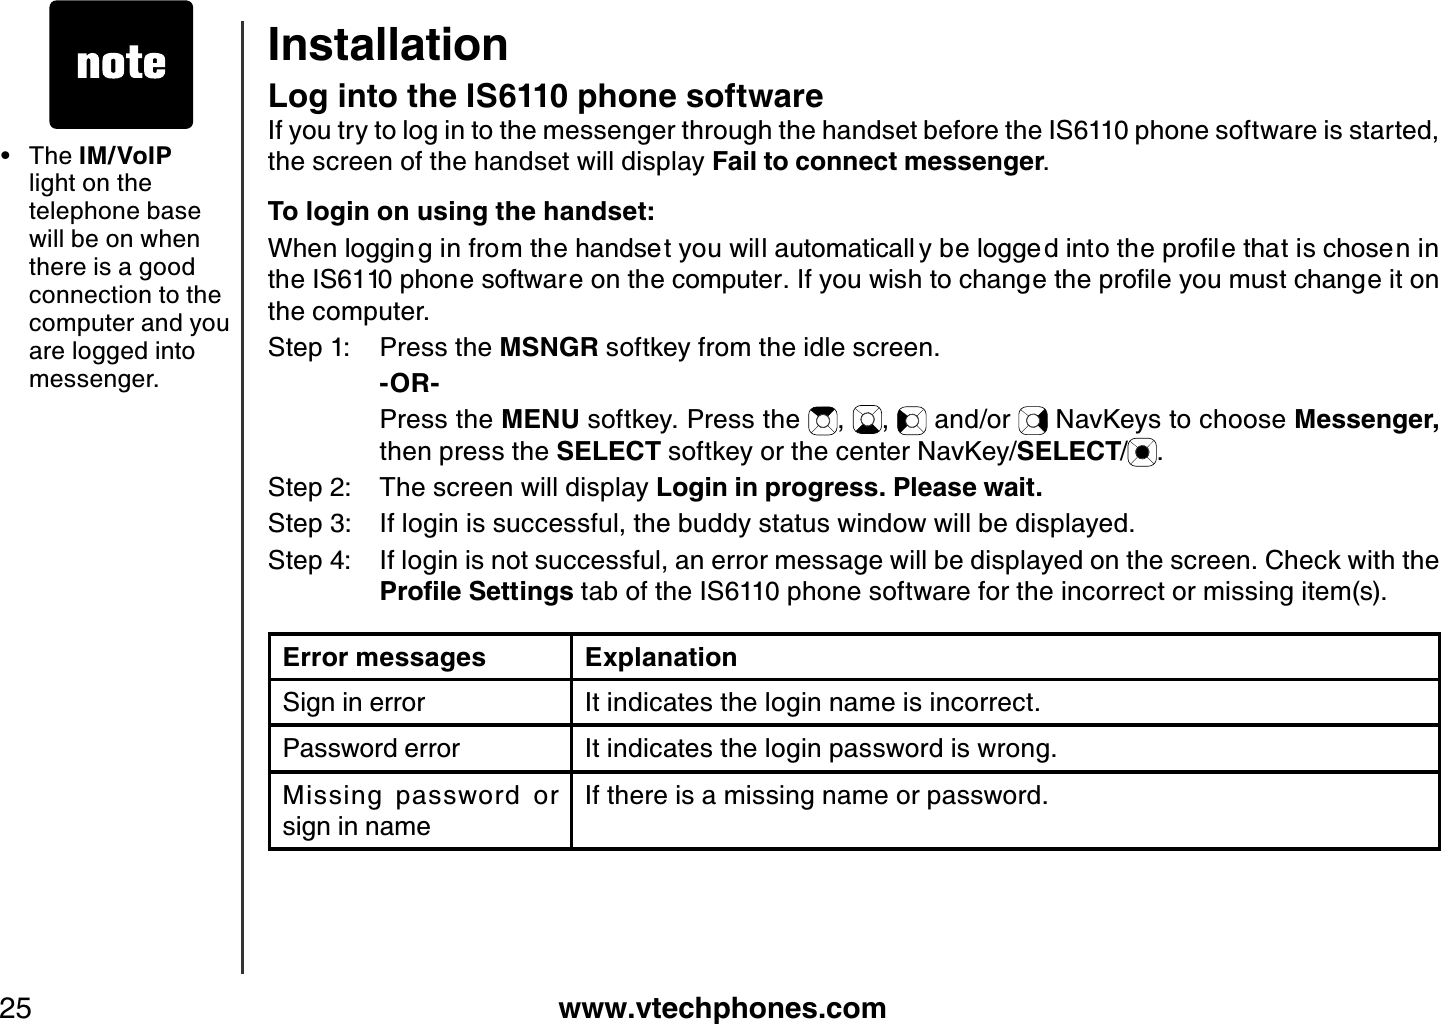 www.vtechphones.com25Log into the IS6110 phone softwareIf you try to log in to the messenger through the handset before the IS6110 phone software is started, the screen of the handset will display Fail to connect messenger.To login on using the handset:9JGPNQIIKPIKPHTQOVJGJCPFUGV[QWYKNNCWVQOCVKECNN [DGNQIIGFKPVQVJGRTQſNGVJCVKUEJQUGPKPVJG+5RJQPGUQHVYCTGQPVJGEQORWVGT+H[QWYKUJVQEJCPIGVJGRTQſNG[QWOWUVEJCPIGKVQPthe computer.Step 1: Press the MSNGR softkey from the idle screen.    -OR-    Press the MENU softkey. Press the  , ,  and/or   NavKeys to choose Messenger,then press the SELECT softkey or the center NavKey/SELECT/.Step 2: The screen will display Login in progress. Please wait.Step 3: If login is successful, the buddy status window will be displayed.Step 4: If login is not successful, an error message will be displayed on the screen. Check with the 2TQſNG5GVVKPIU tab of the IS6110 phone software for the incorrect or missing item(s).Error messages ExplanationSign in error It indicates the login name is incorrect.Password error It indicates the login password is wrong.Missing  password  or  sign in nameIf there is a missing name or password. The IM/VoIPlight on the telephone base will be on when there is a good connection to the computer and you are logged into messenger.•Installation